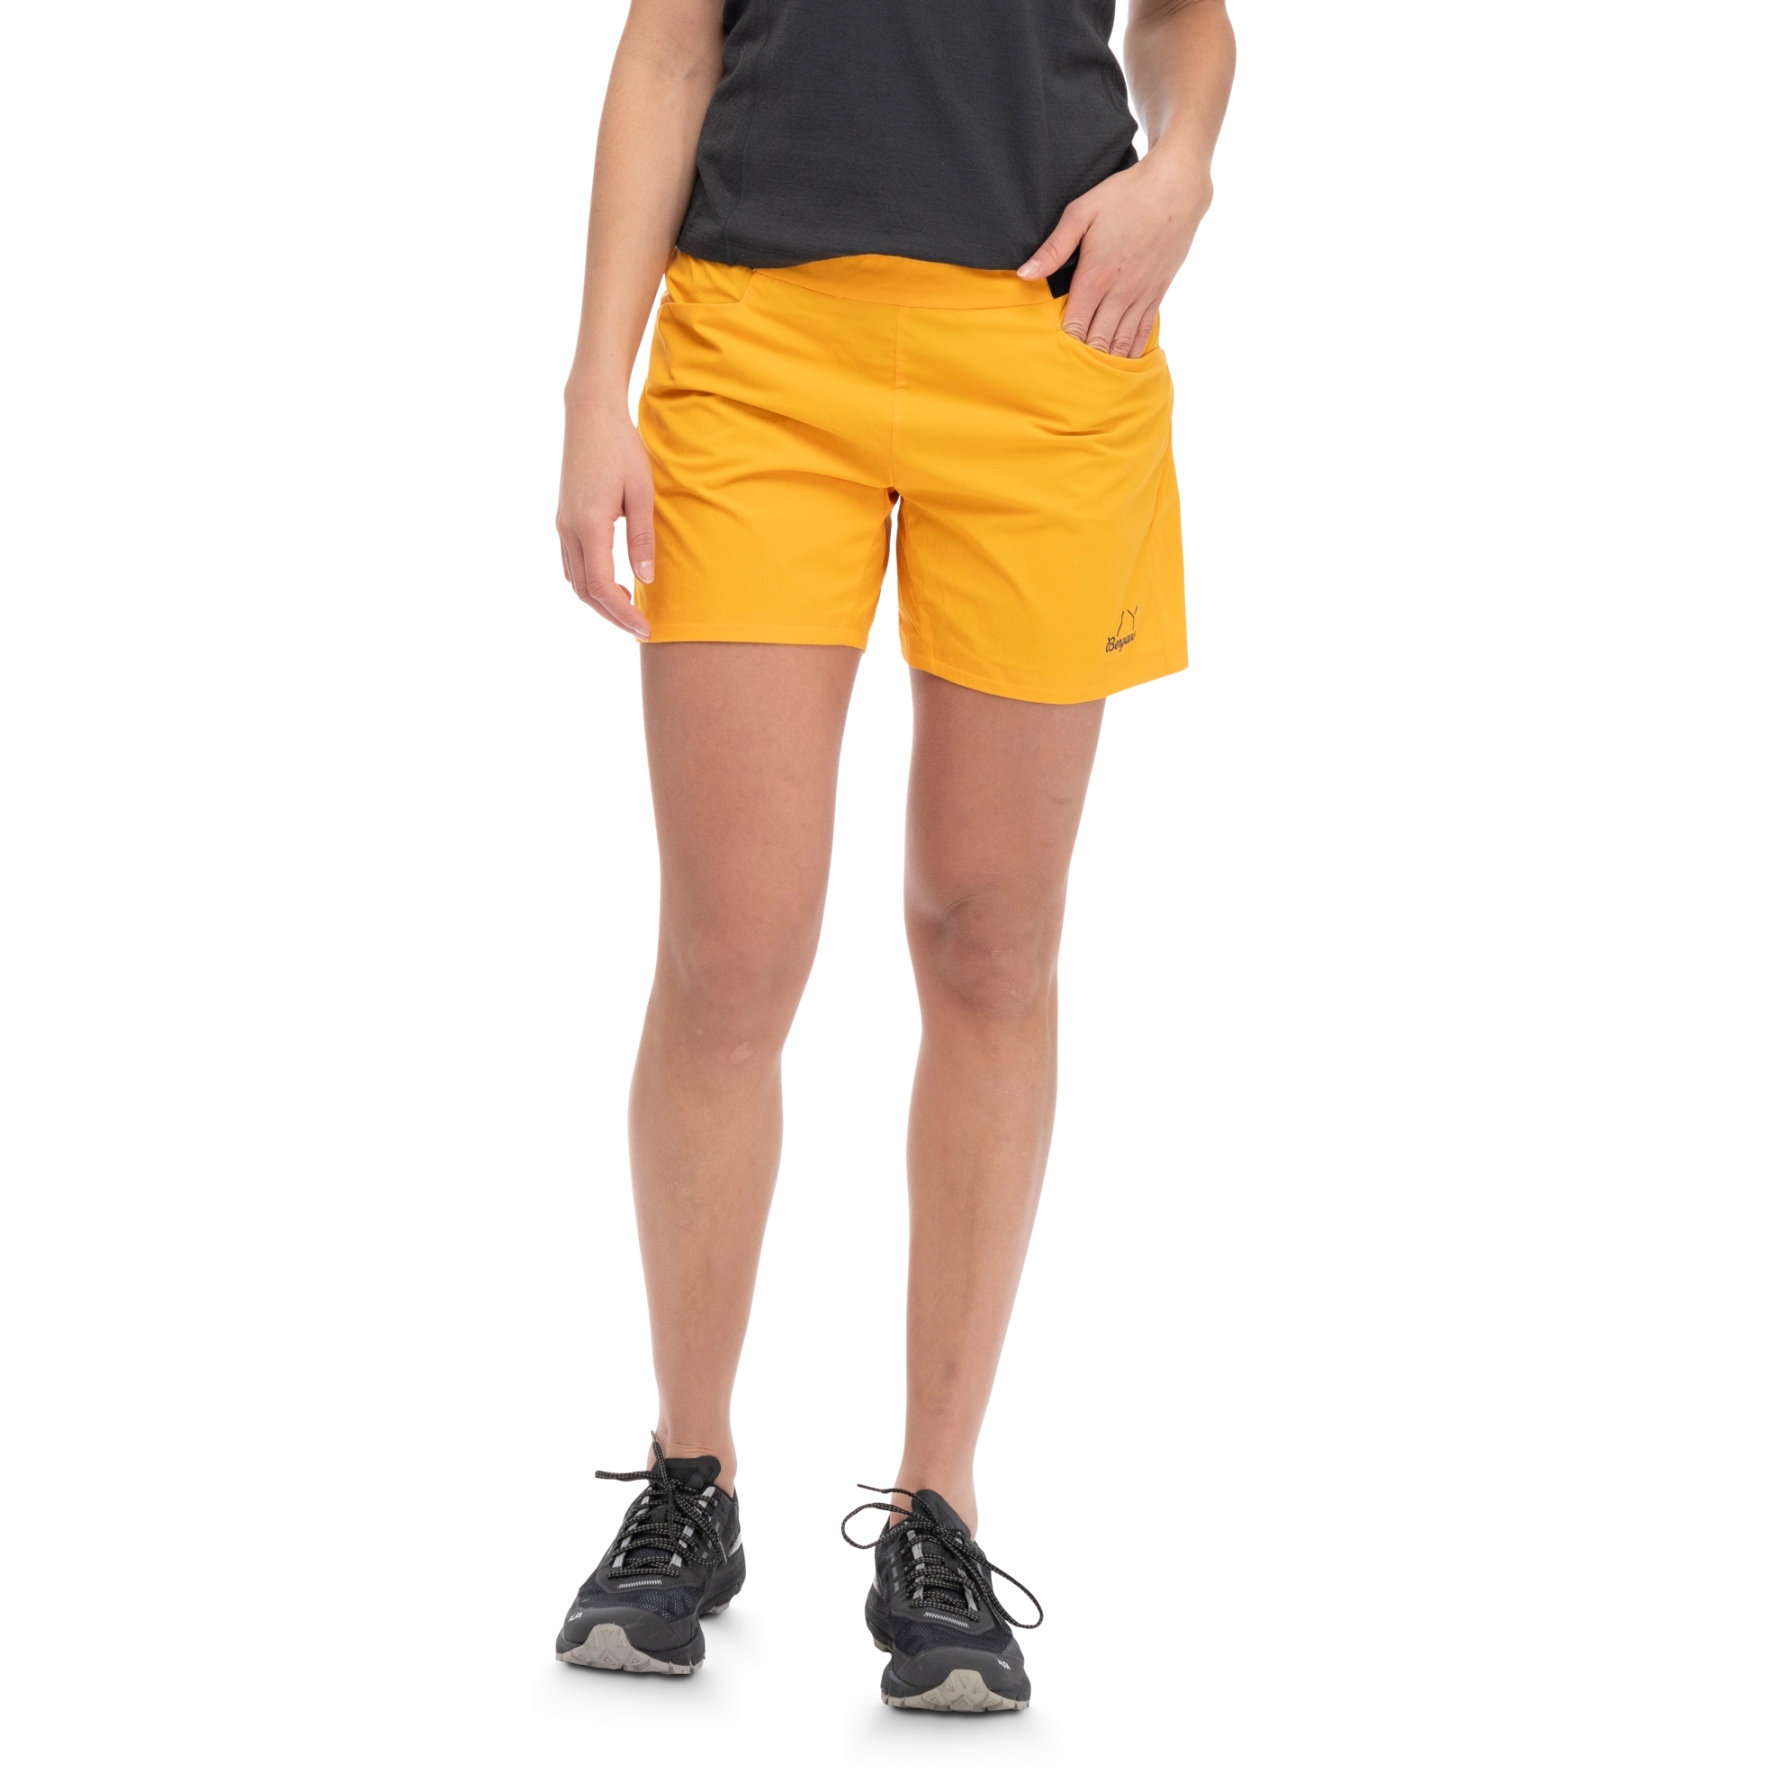 Picture of Bergans Y LightLine Vapor 2 Shorts Women - mango yellow/dark shadow grey